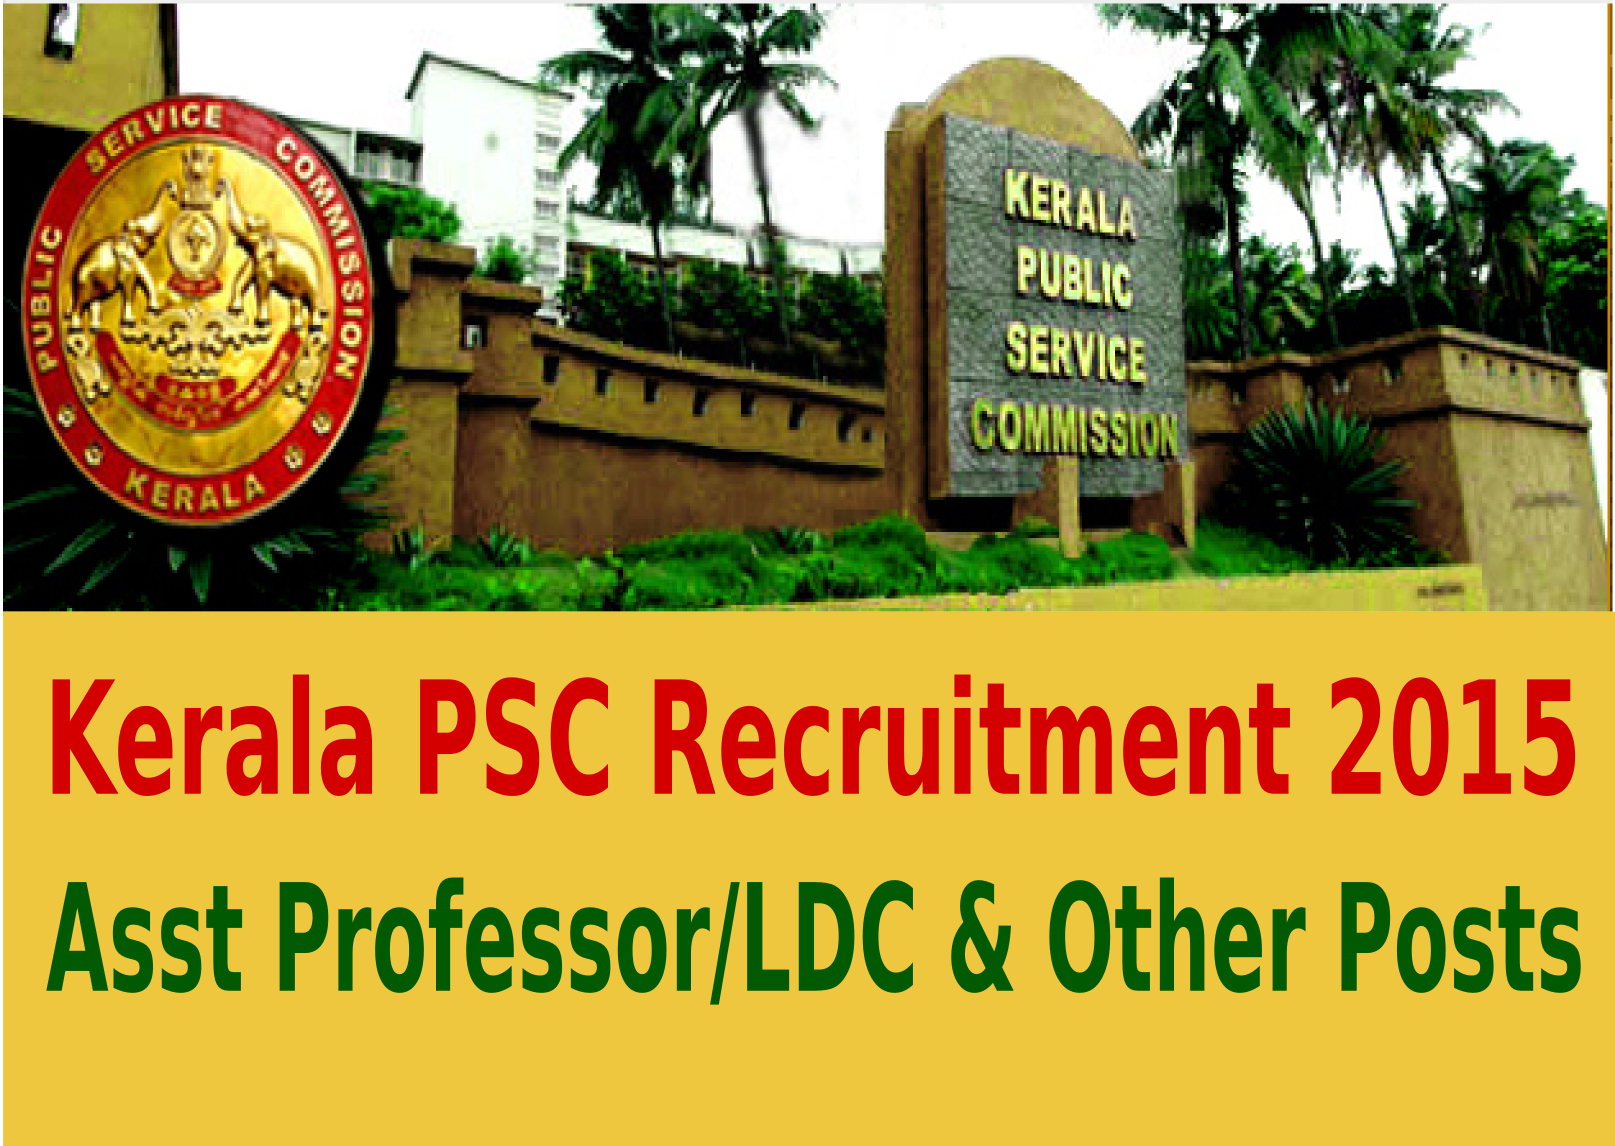 Kerala PSC Recruitment 2015 For Asst Professor LDC & Other Posts